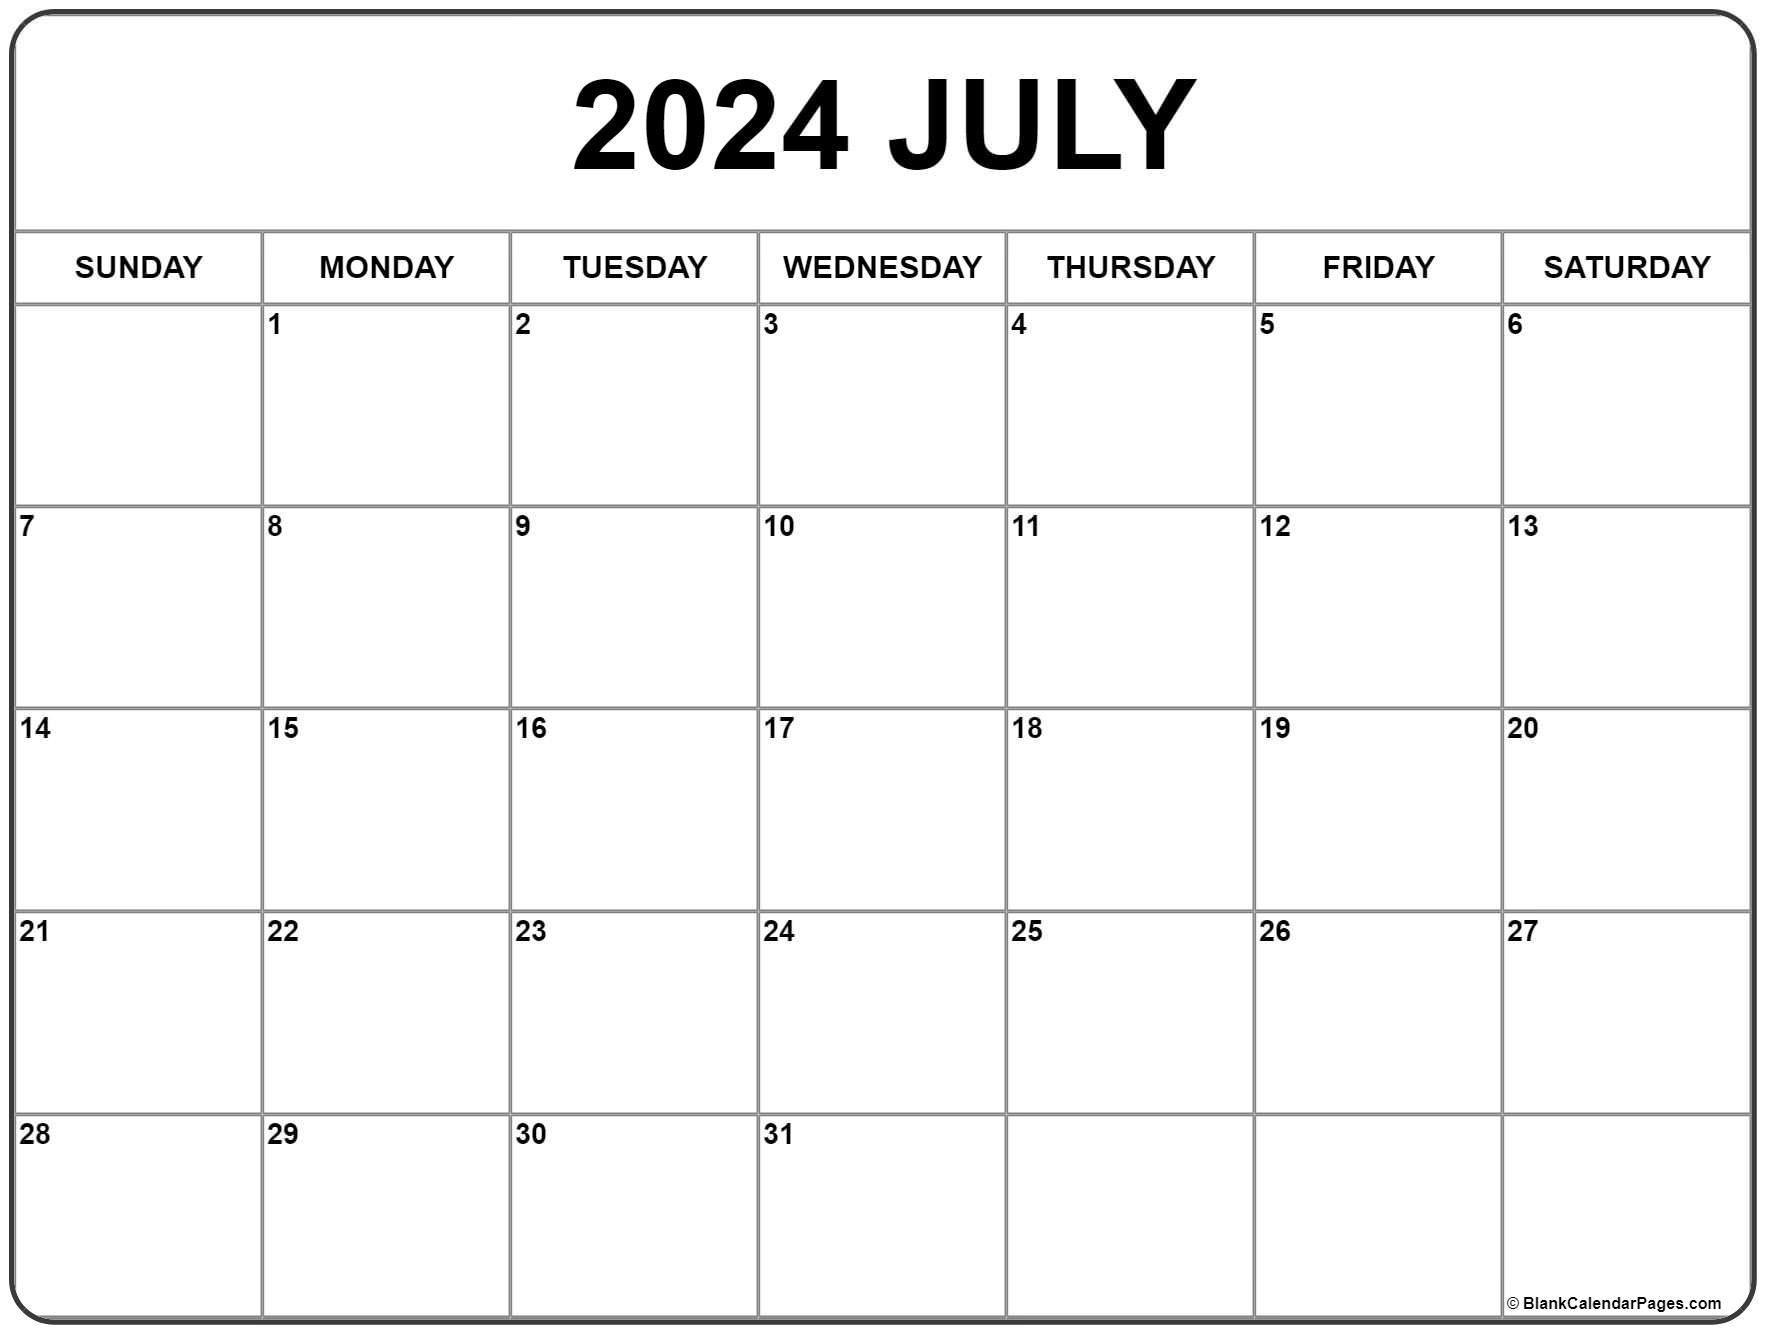 July 2024 Calendar | Free Printable Calendar inside Calendar Template For July 2024